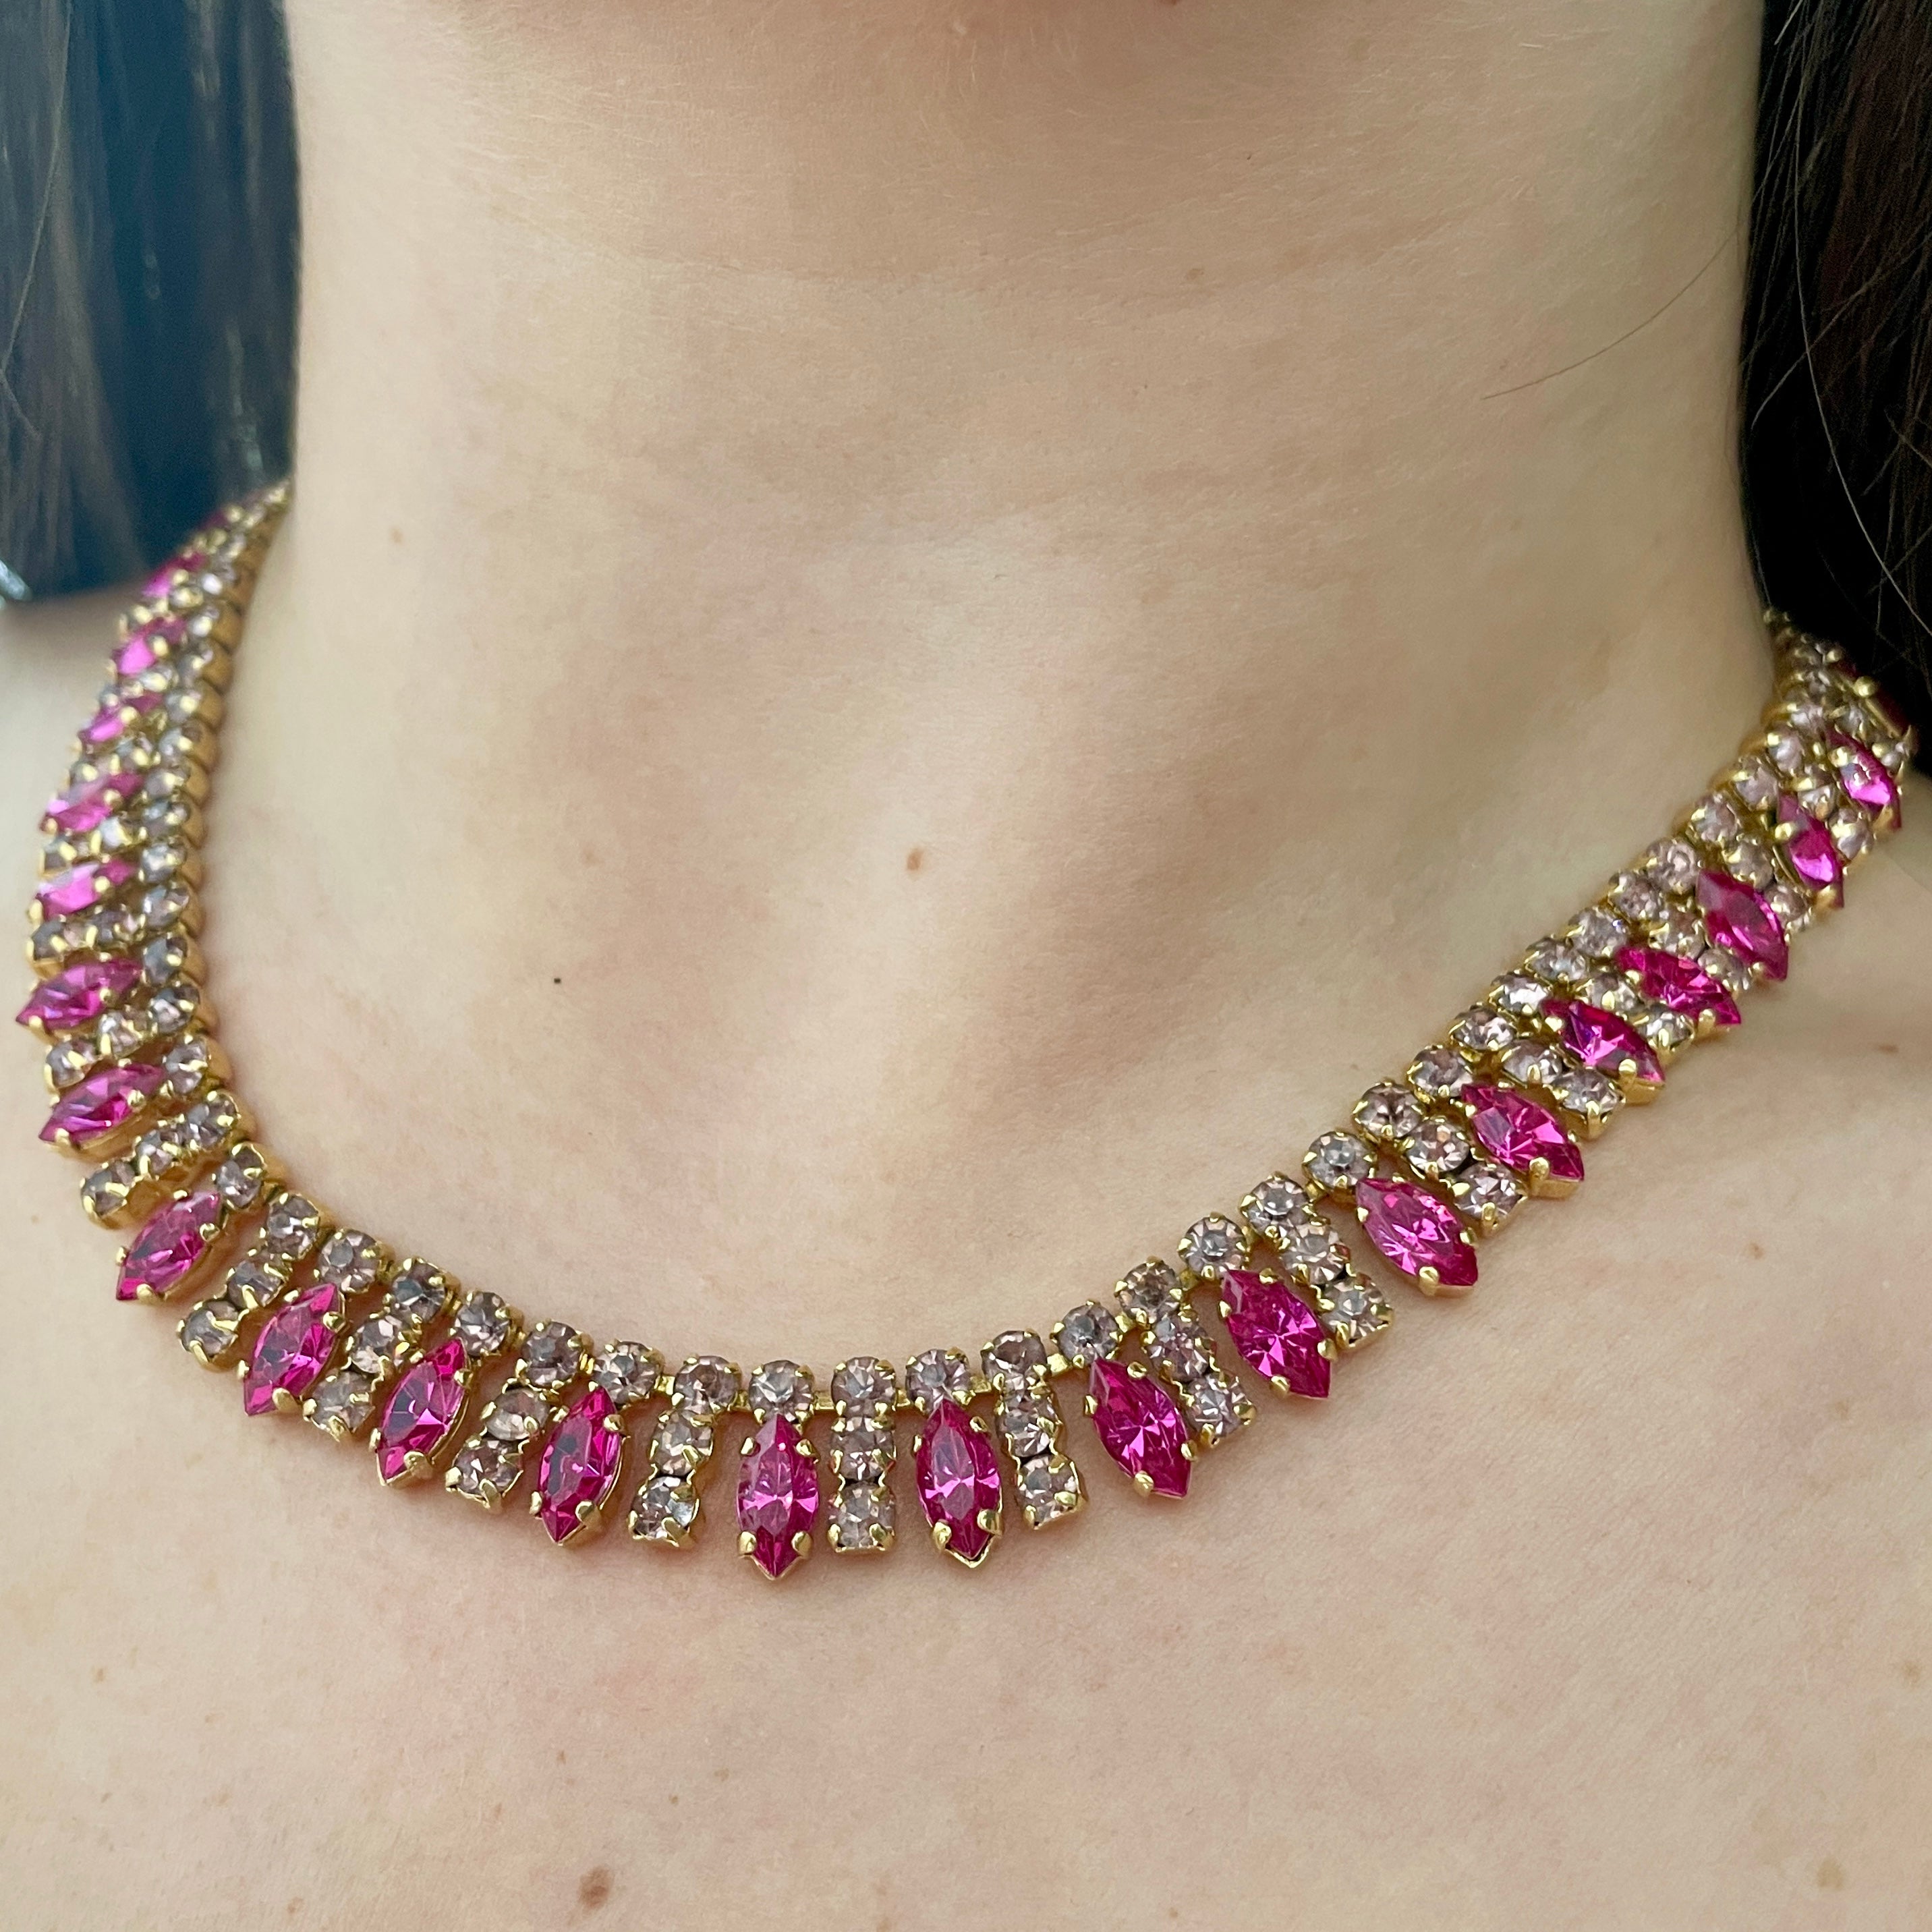 glass pendant necklace uk, unique necklaces, dichroic glass jewellery uk